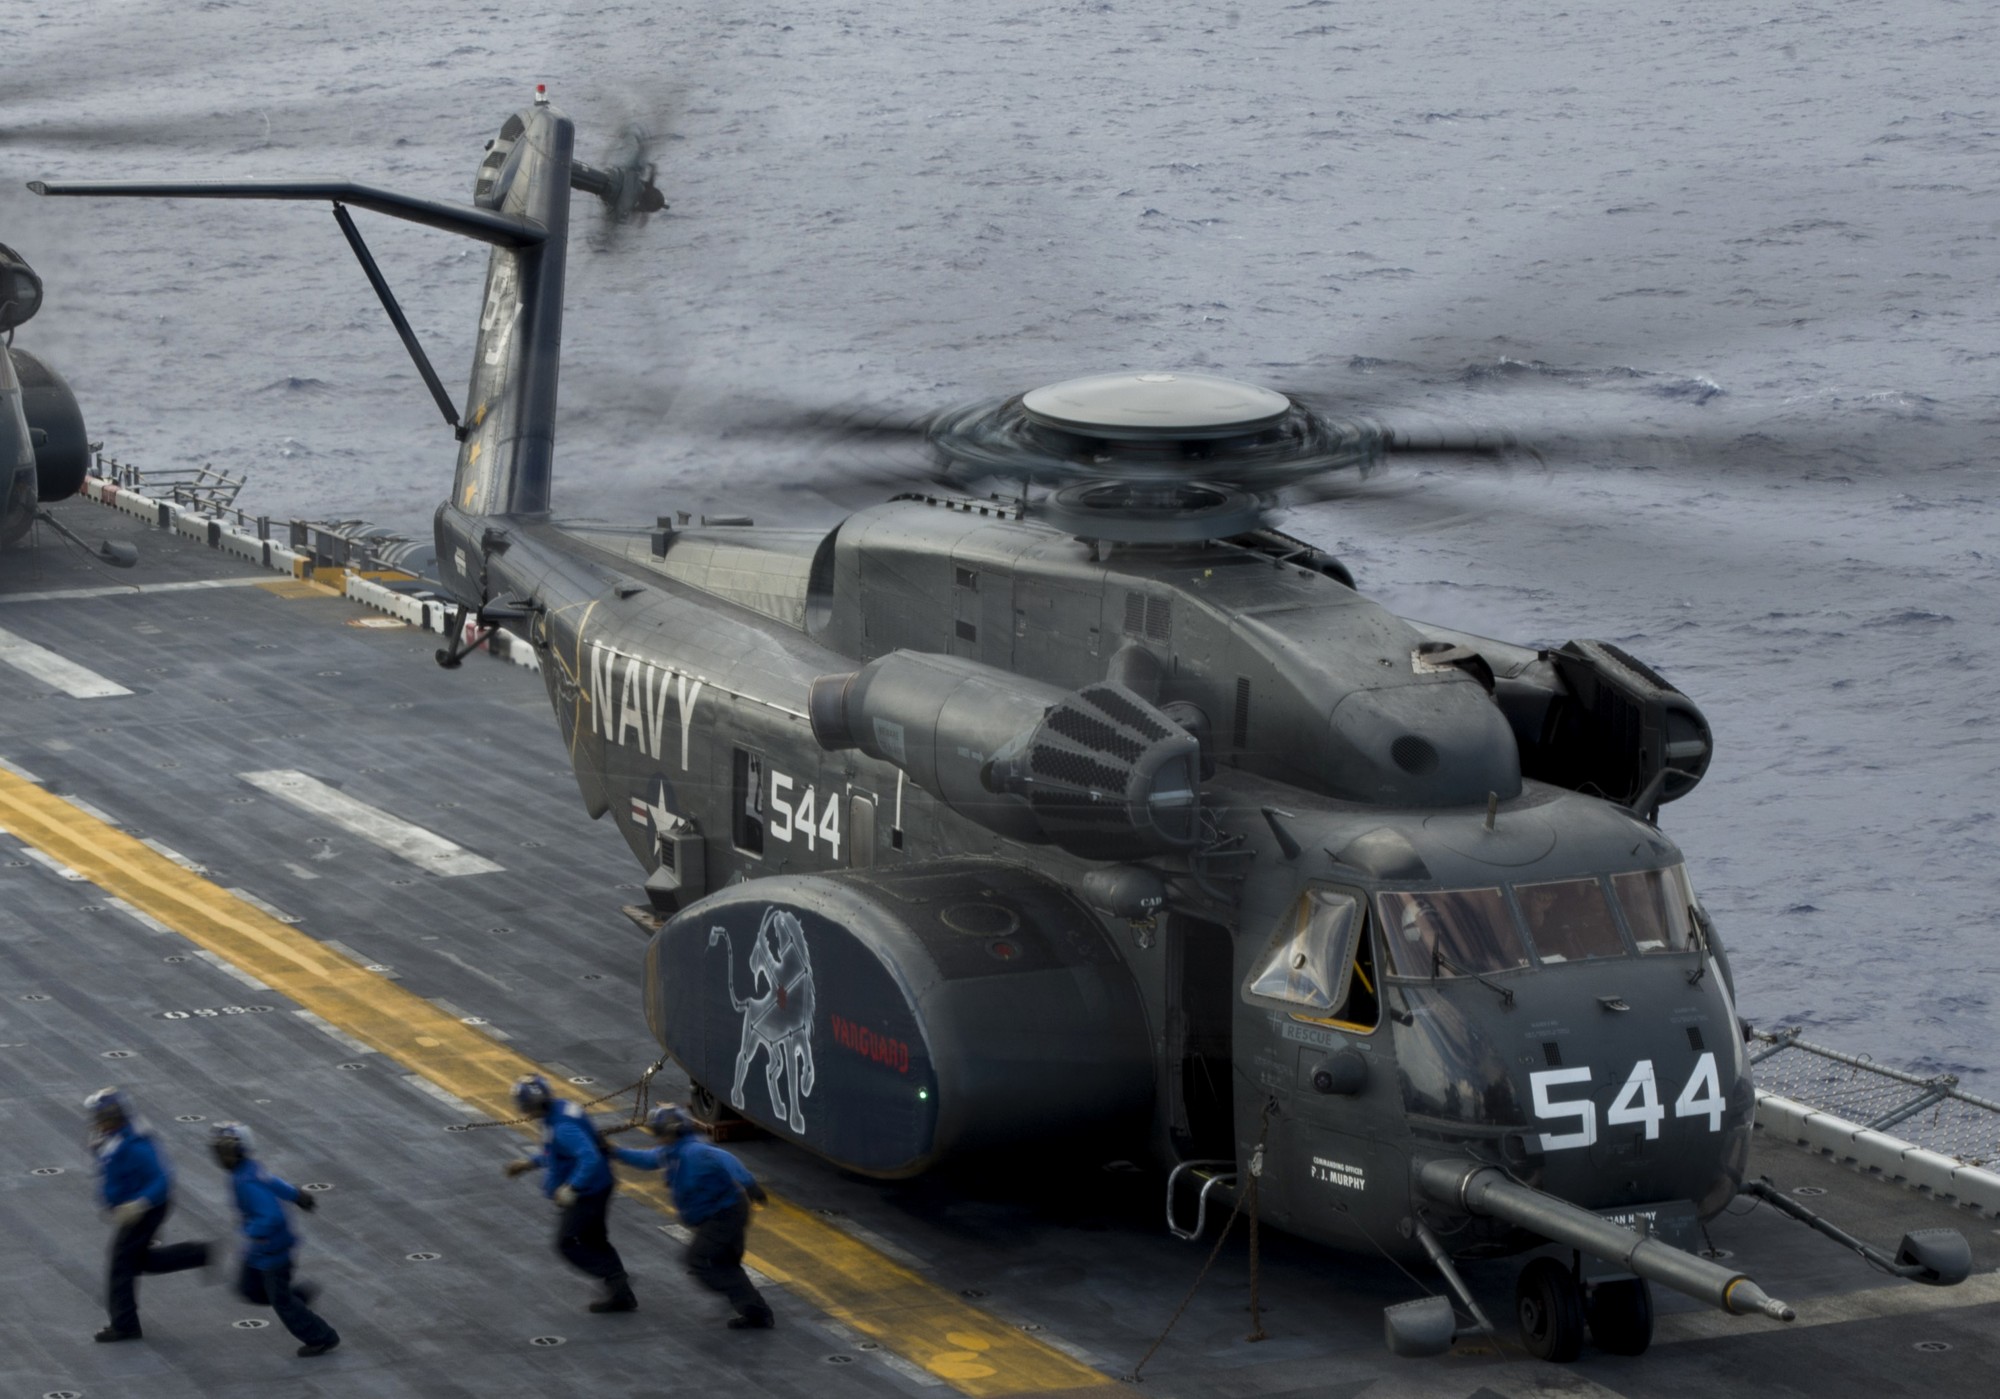 hm-14 vanguard helicopter mine countermeasures squadron navy mh-53e sea dragon 134